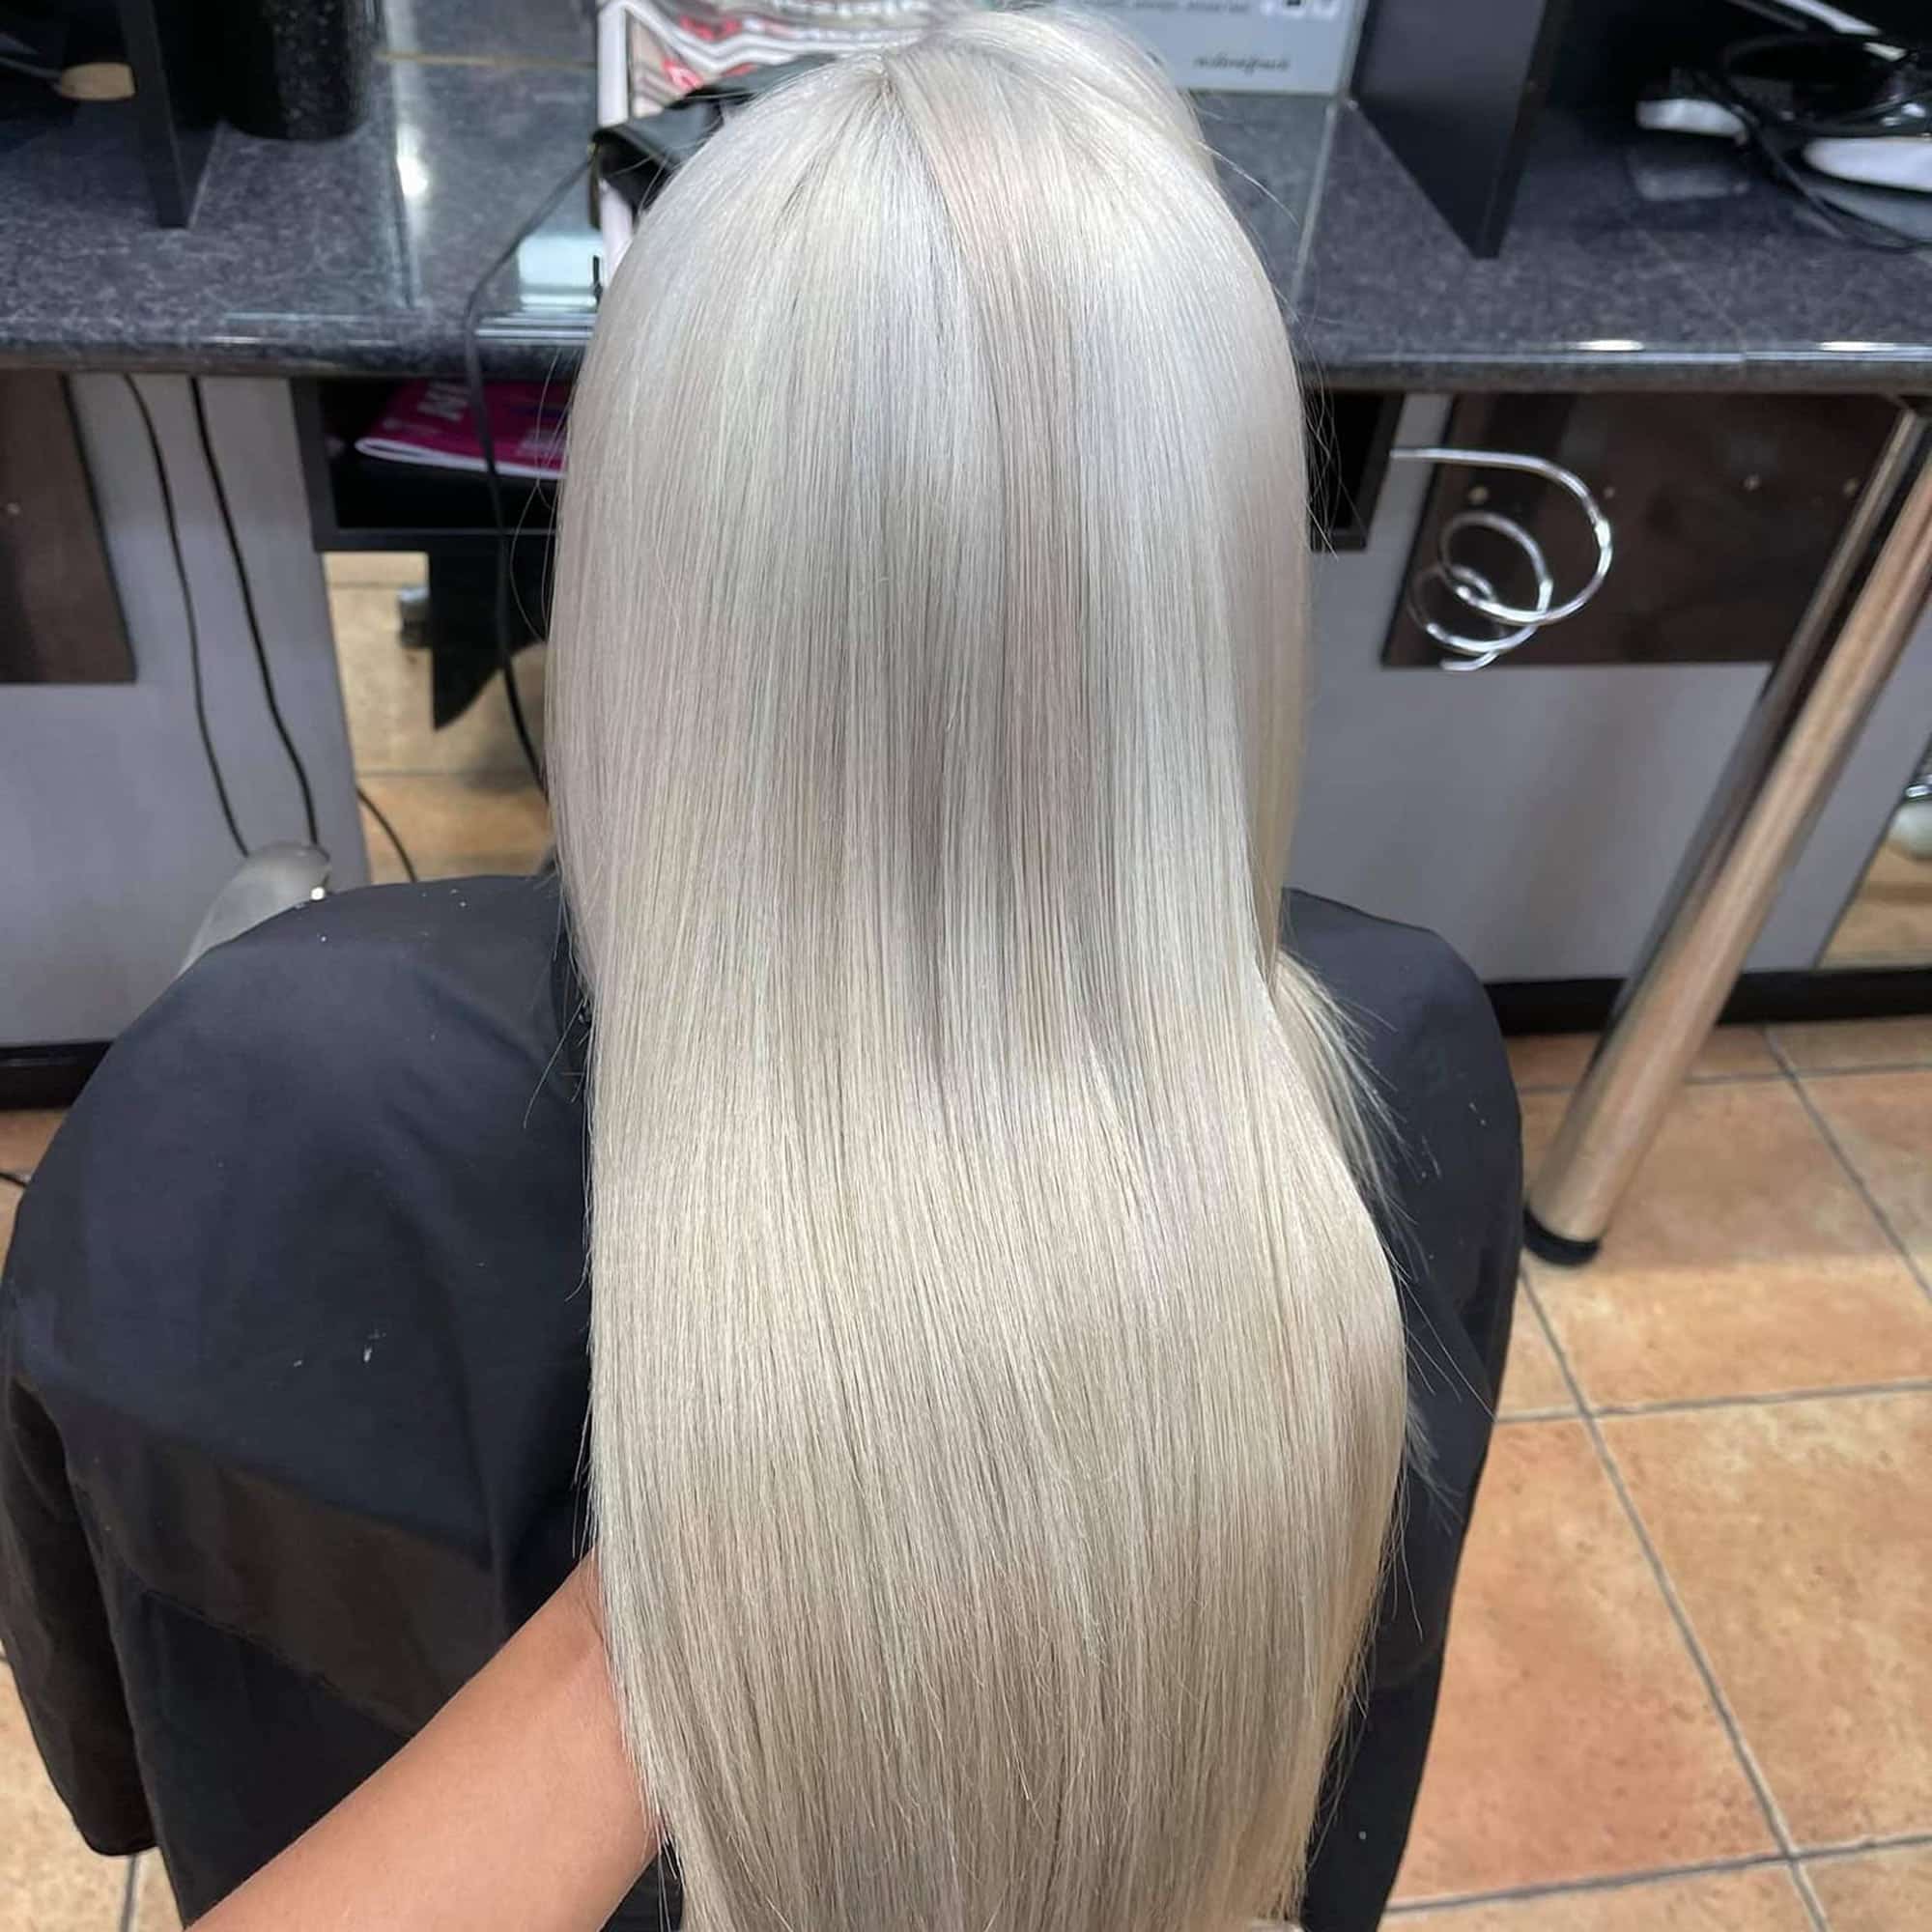 A Long and Light Blonde Hair — Hair Salon in Darwin, NT